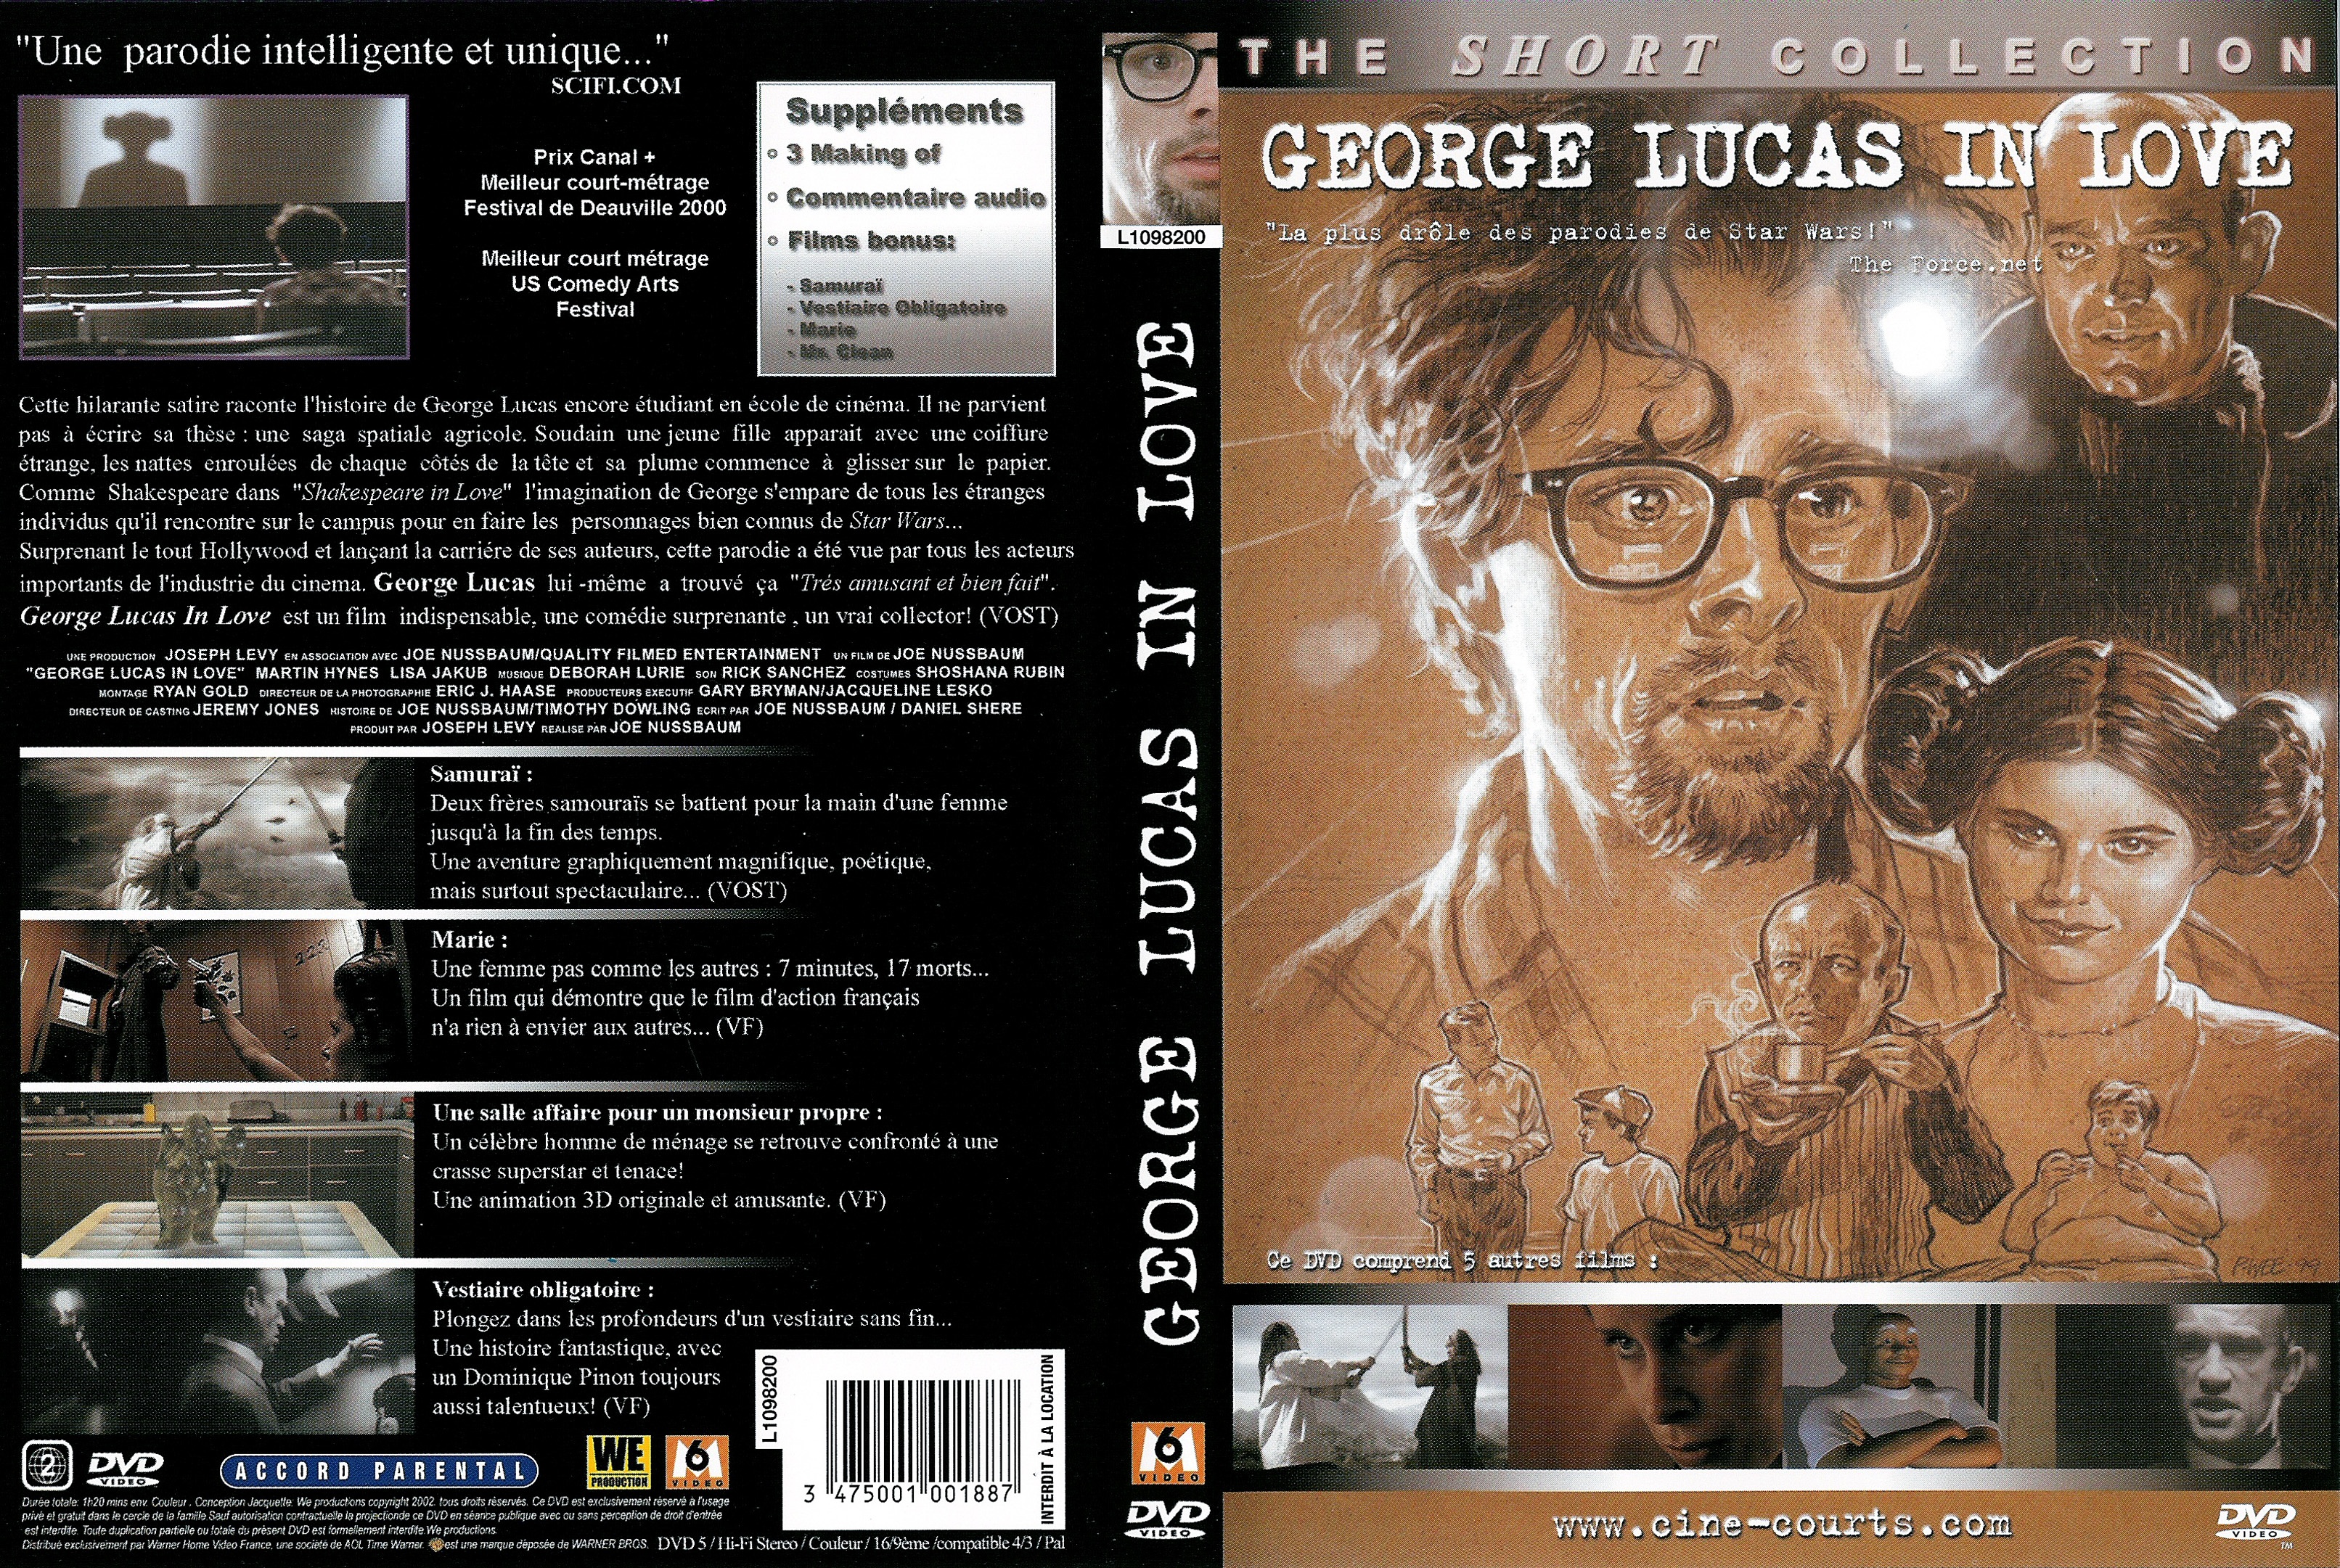 Jaquette DVD George Lucas in love